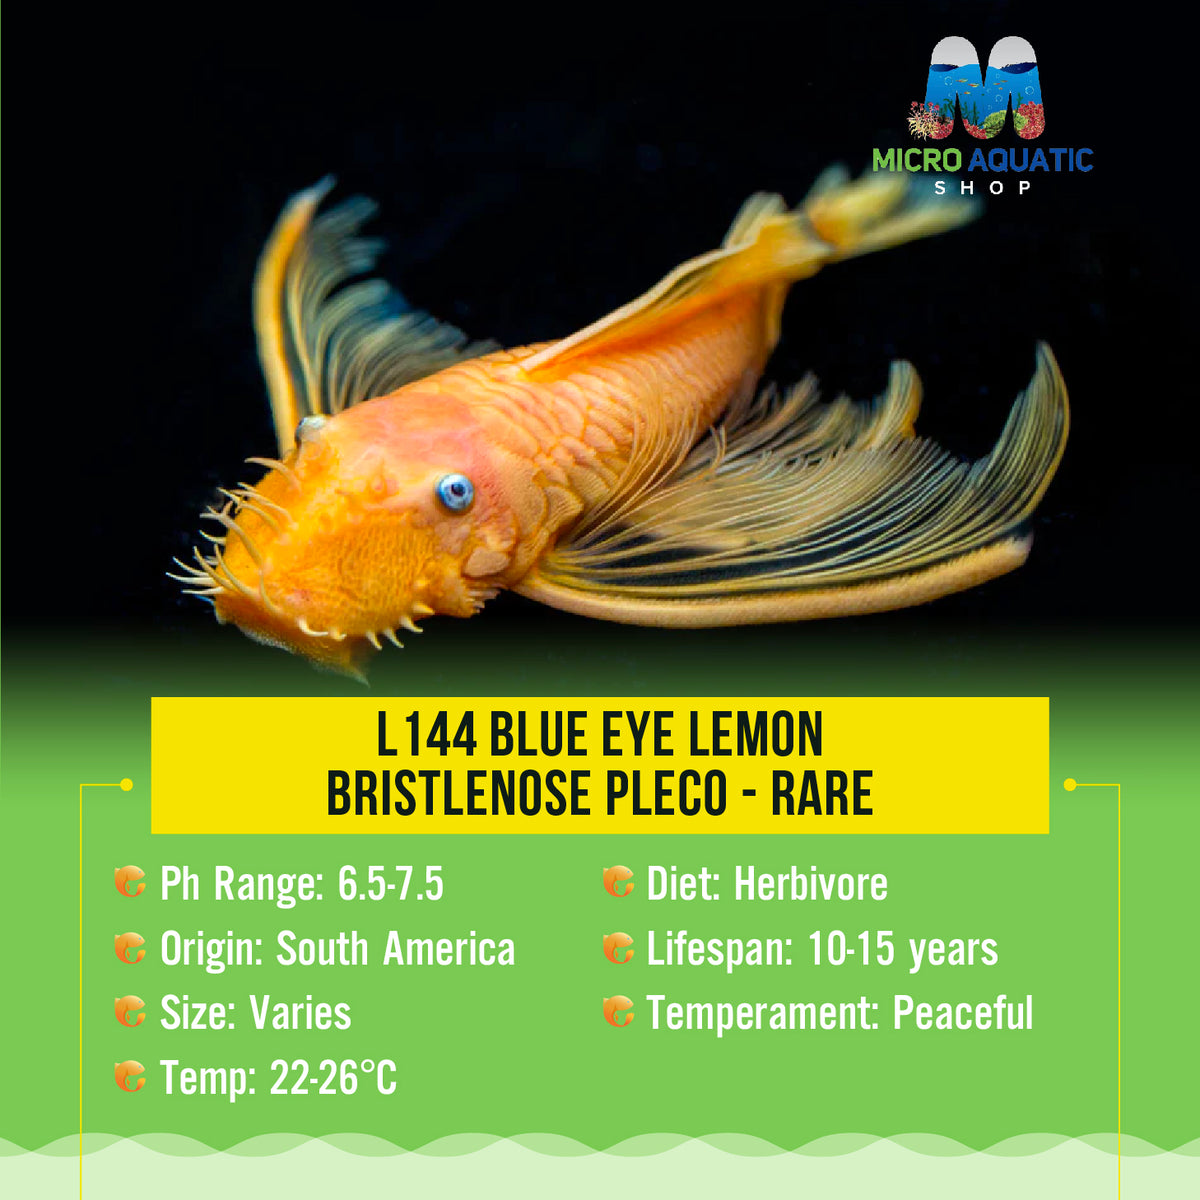 L144 Blue Eye Lemon Bristlenose Pleco - Rare